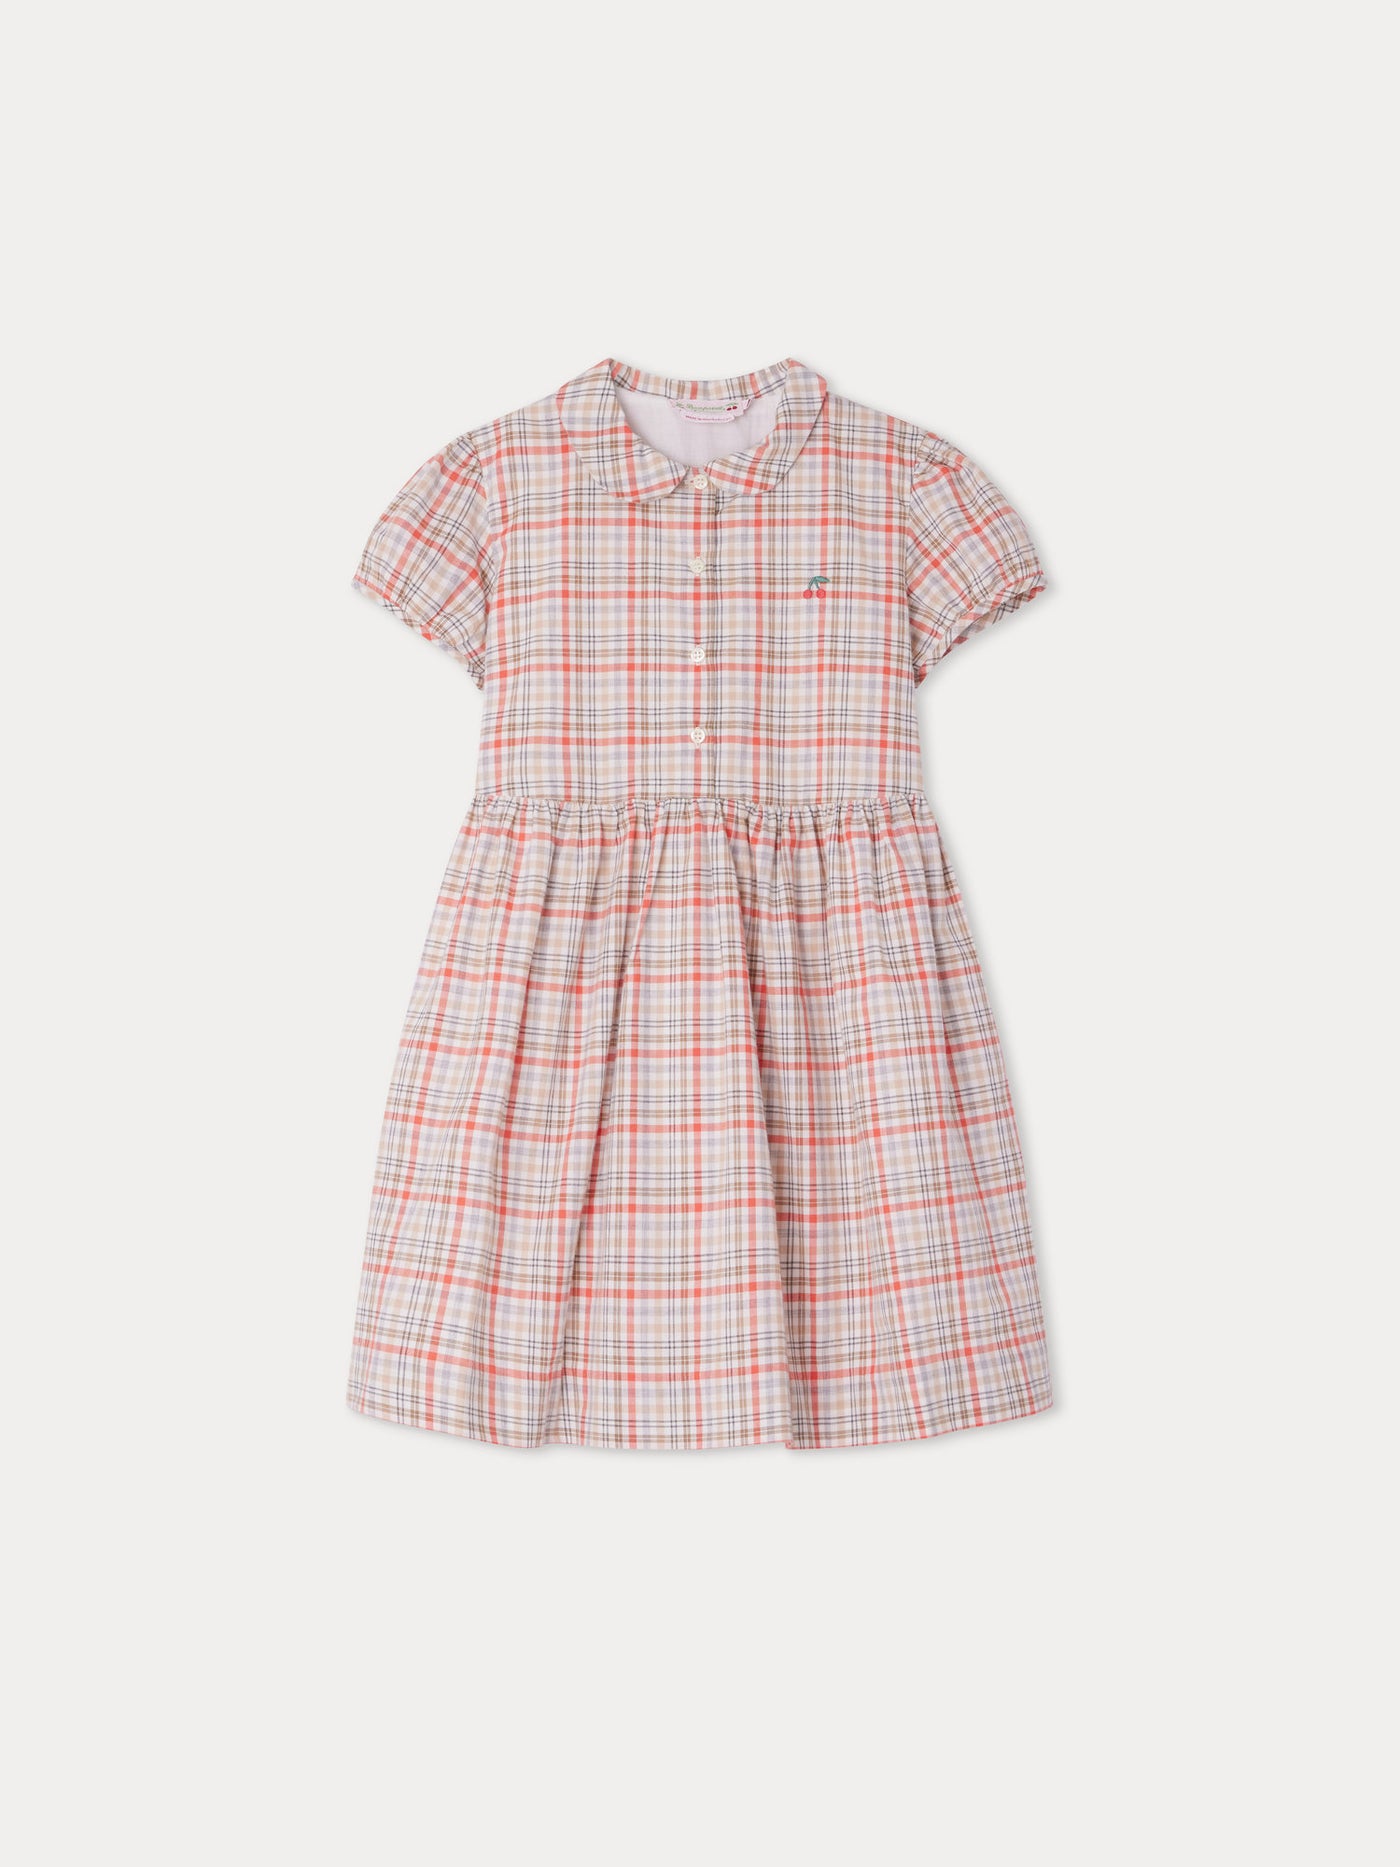 Genereuse checkered dress